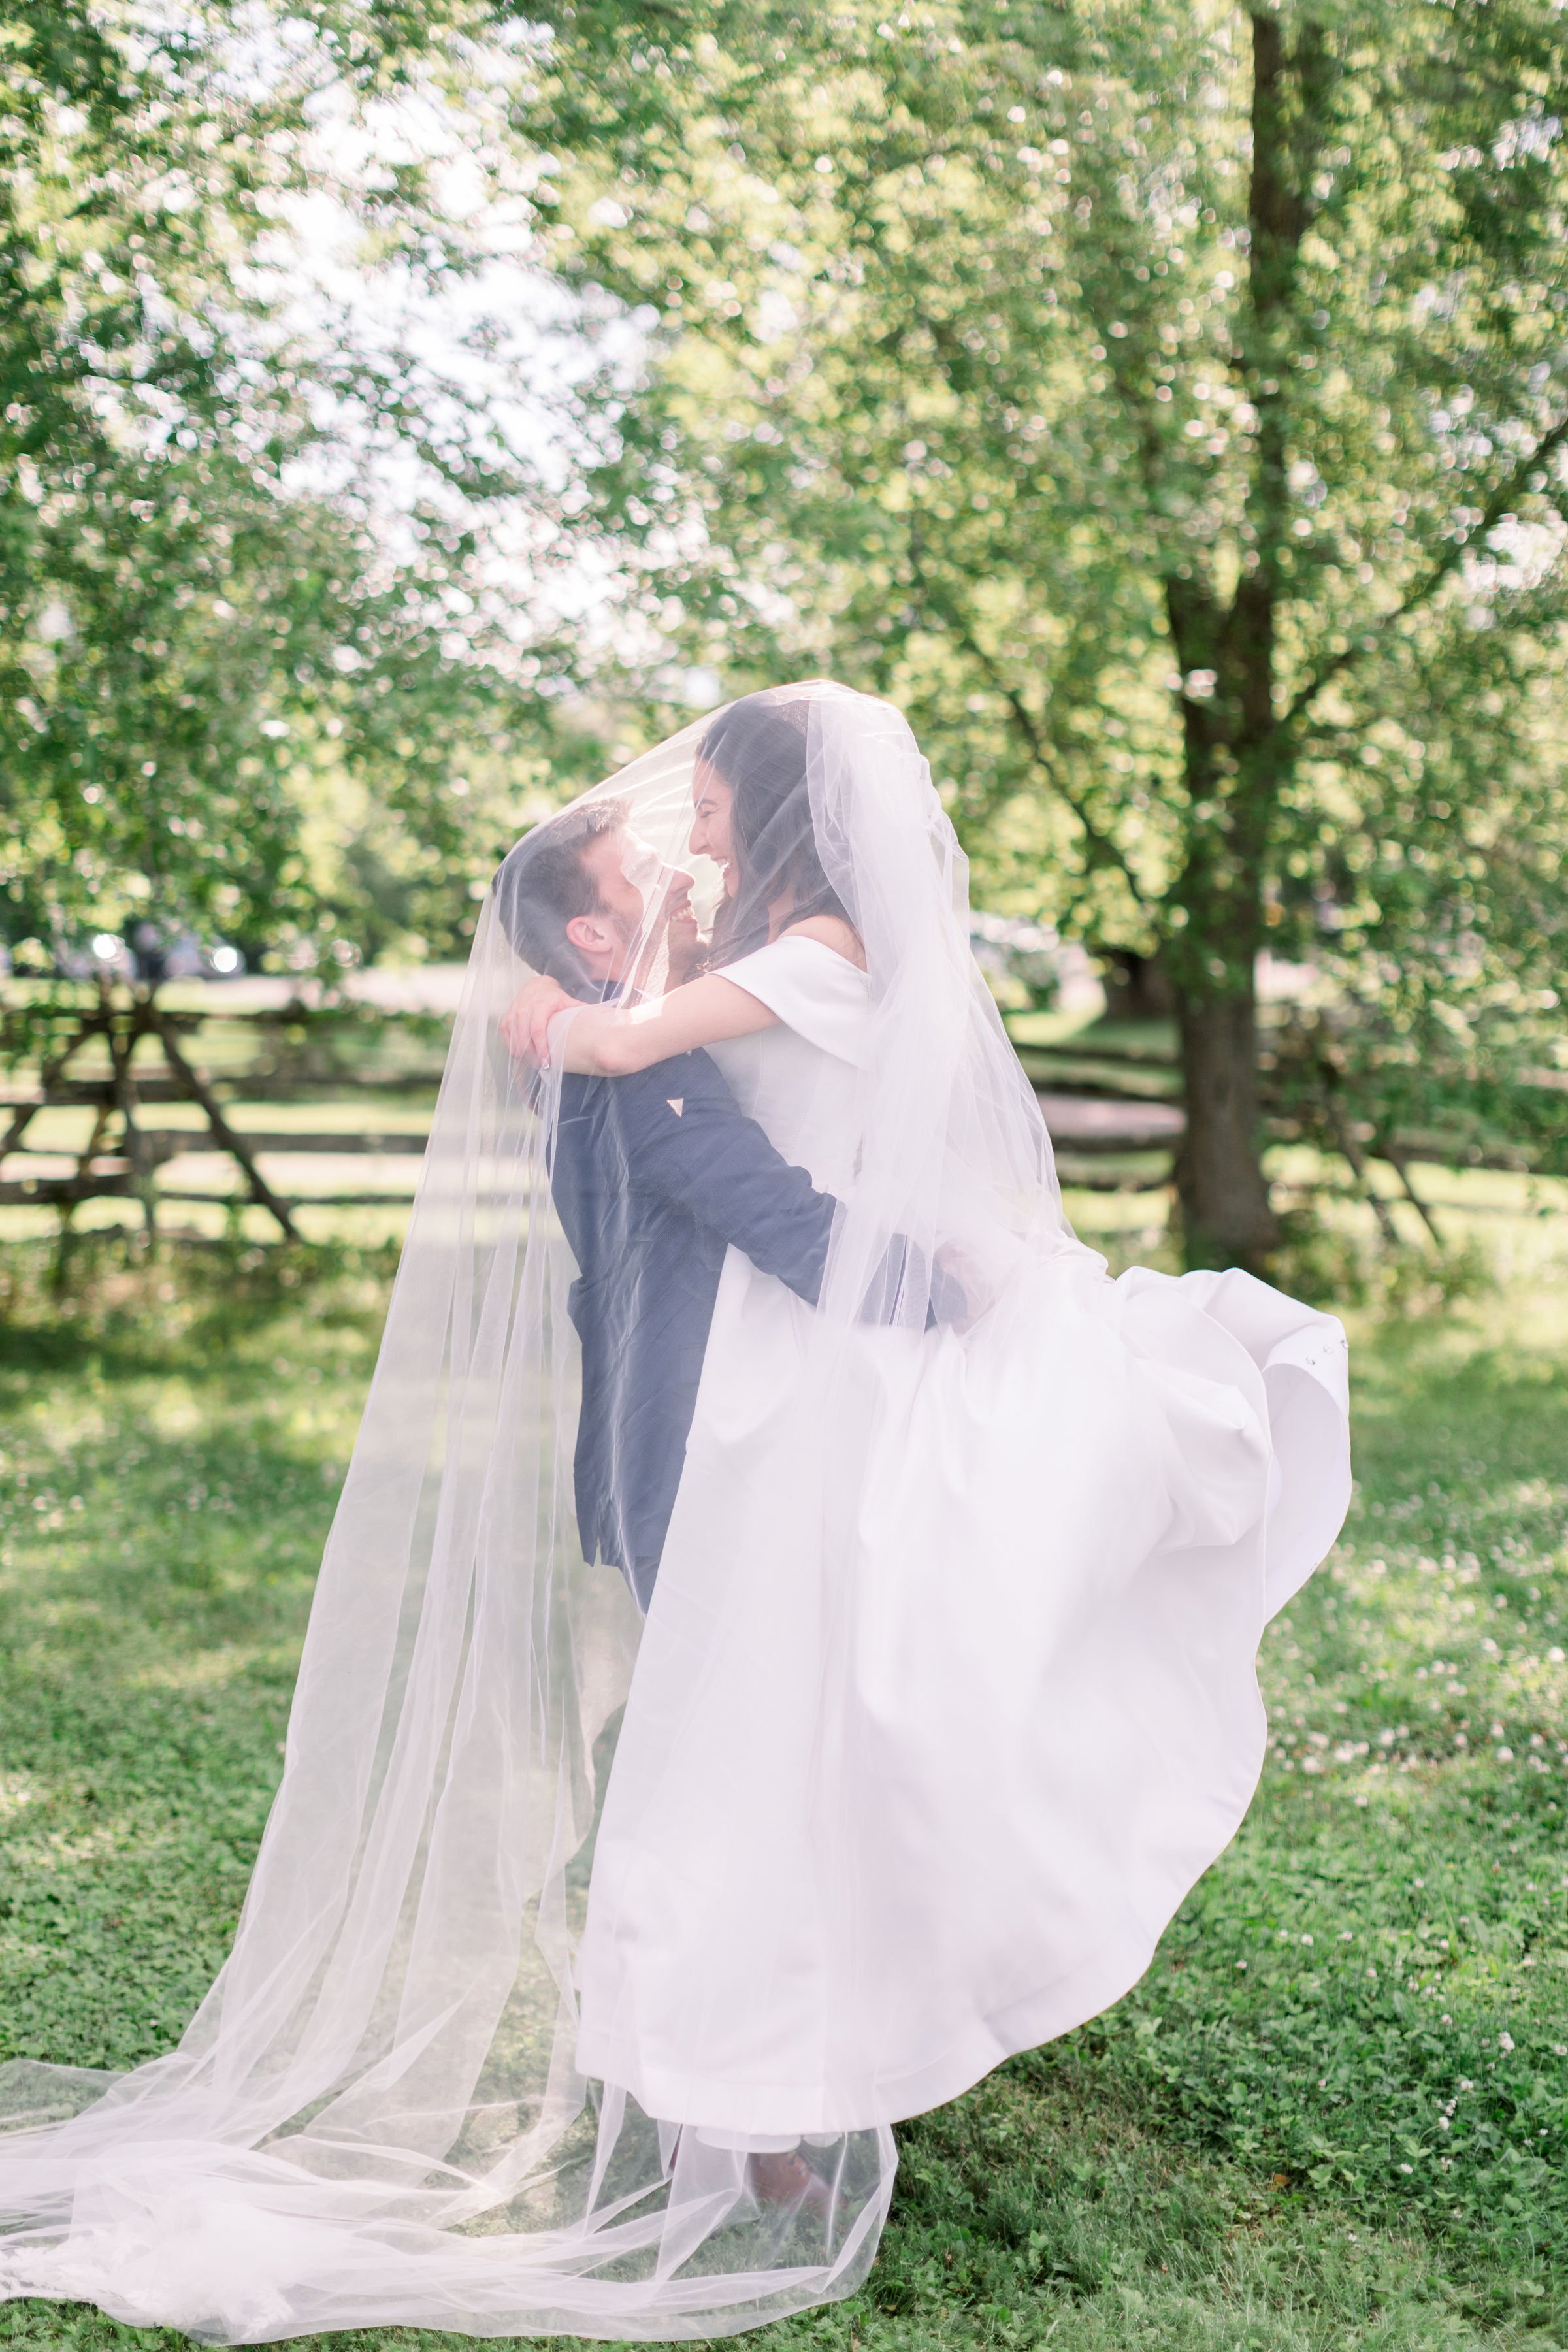  With a sheer full-length veil around them a bride and groom kiss by Chelsea Mason Photography. veil kissing pictures #Chelseamasonphotography #Chelseamasonweddings #Onatarioweddings #EvermoreweddingsAlmonte #Ontarioweddingphotographers 